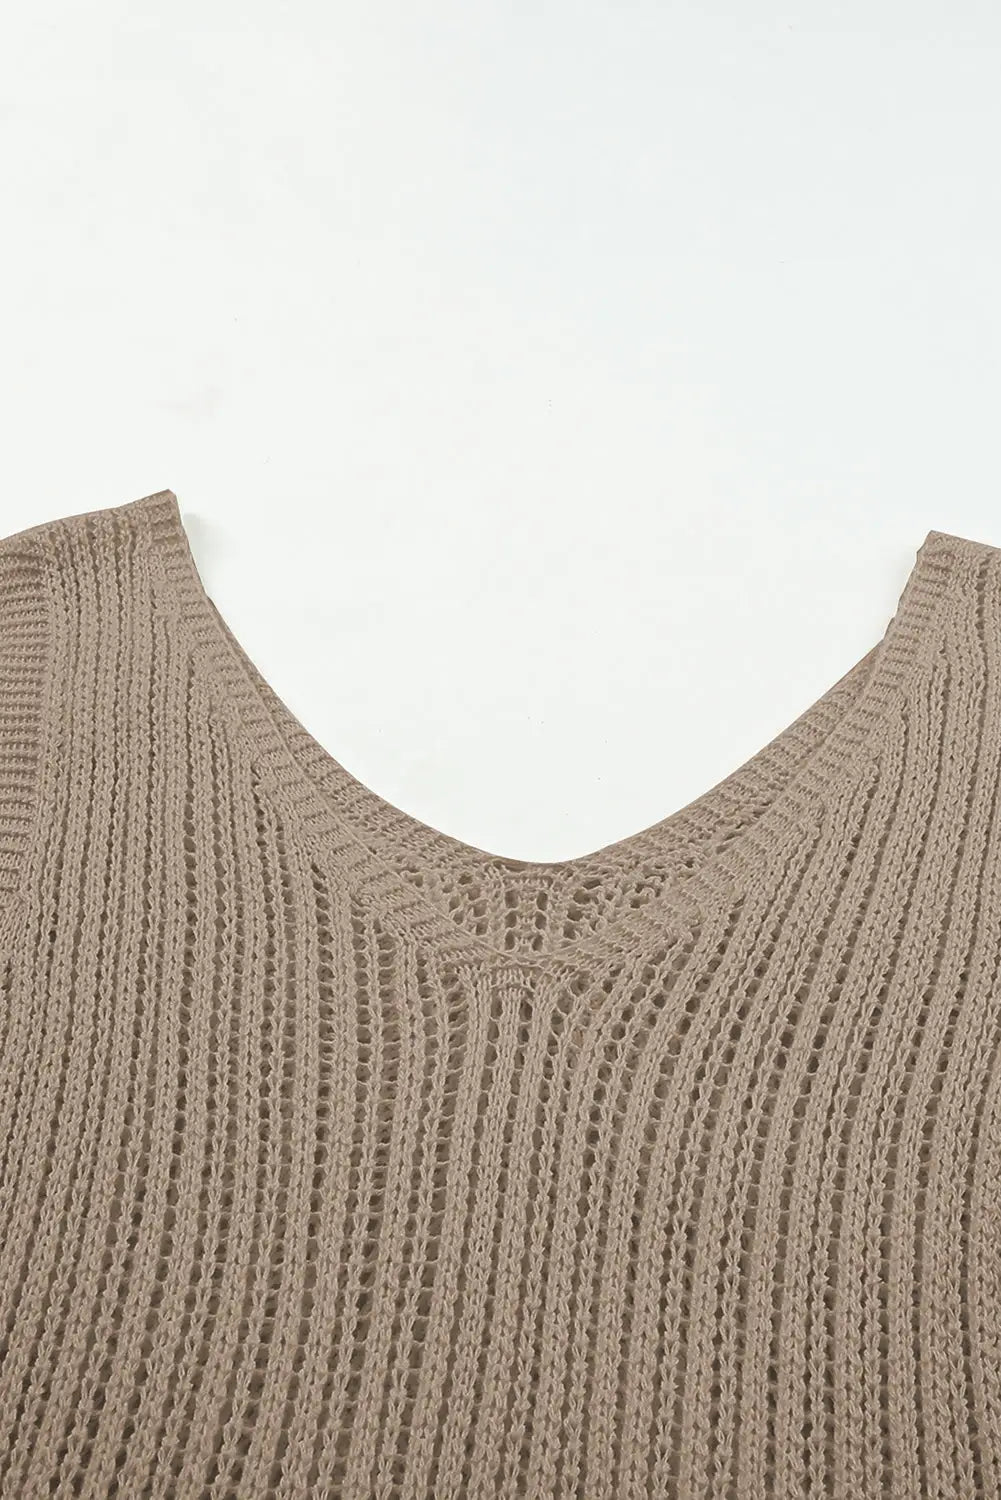 Khaki hollowed knit v neck tank top - tops